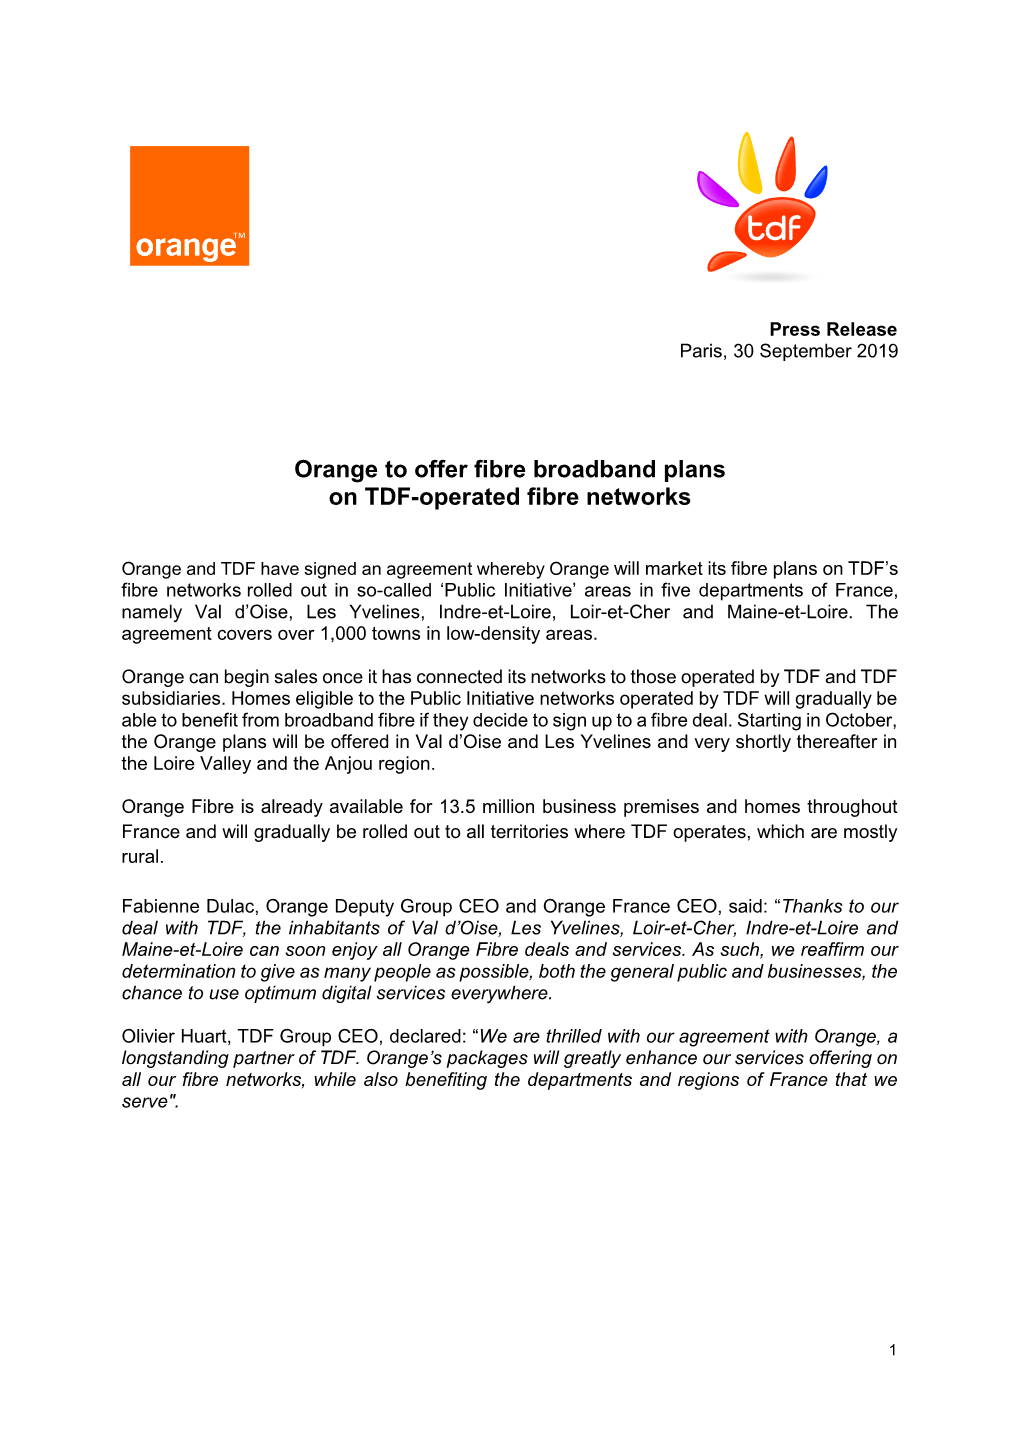 Orange to Offer Fibre Broadband Plans on TDF-Operated Fibre Networks